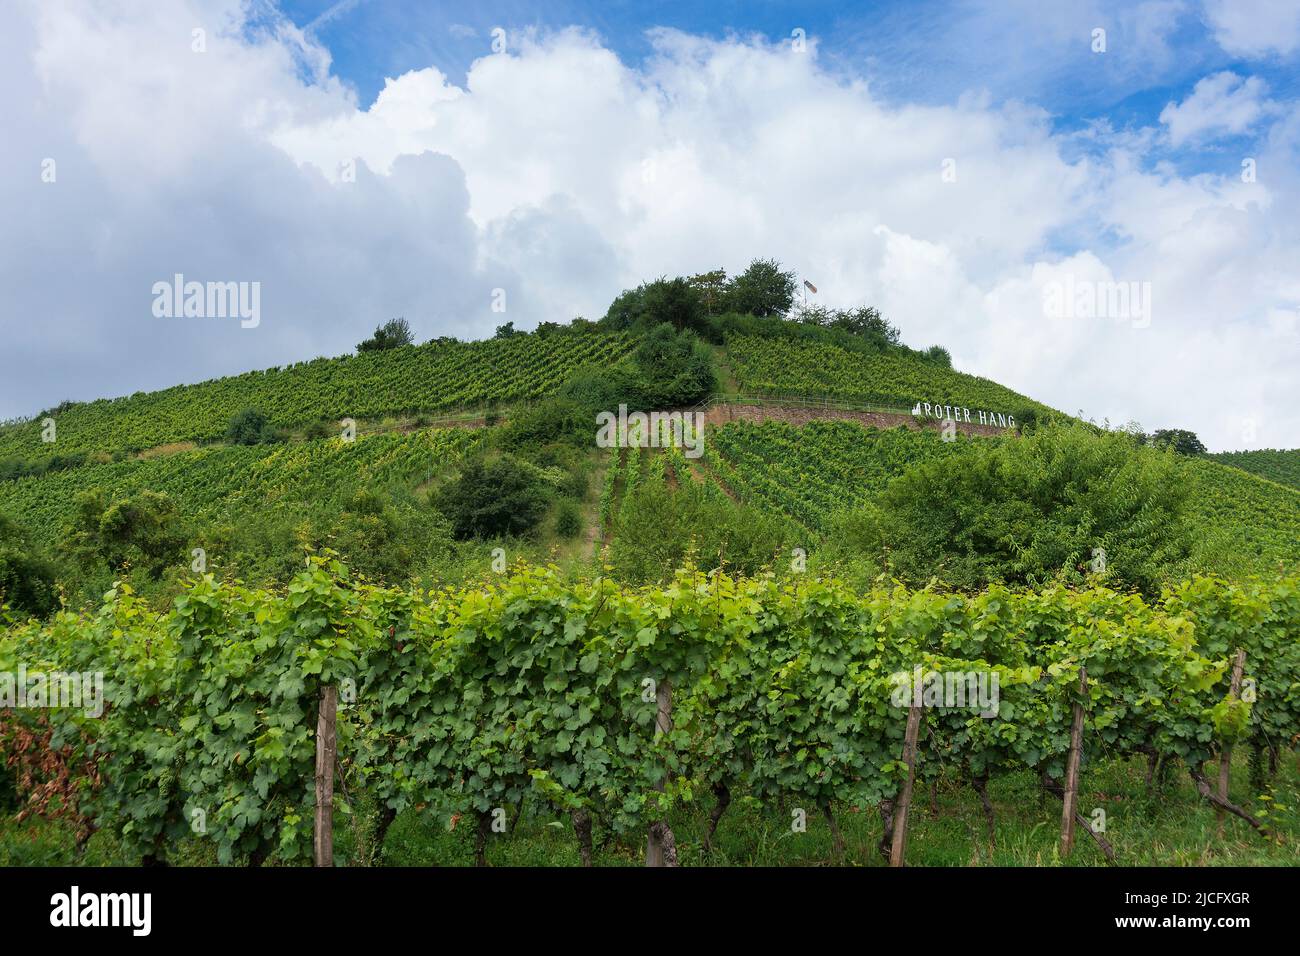 Germany, Rhineland-Palatinate, Rhine terraces near Nierstein, 'Roter Hang' vineyard Stock Photo